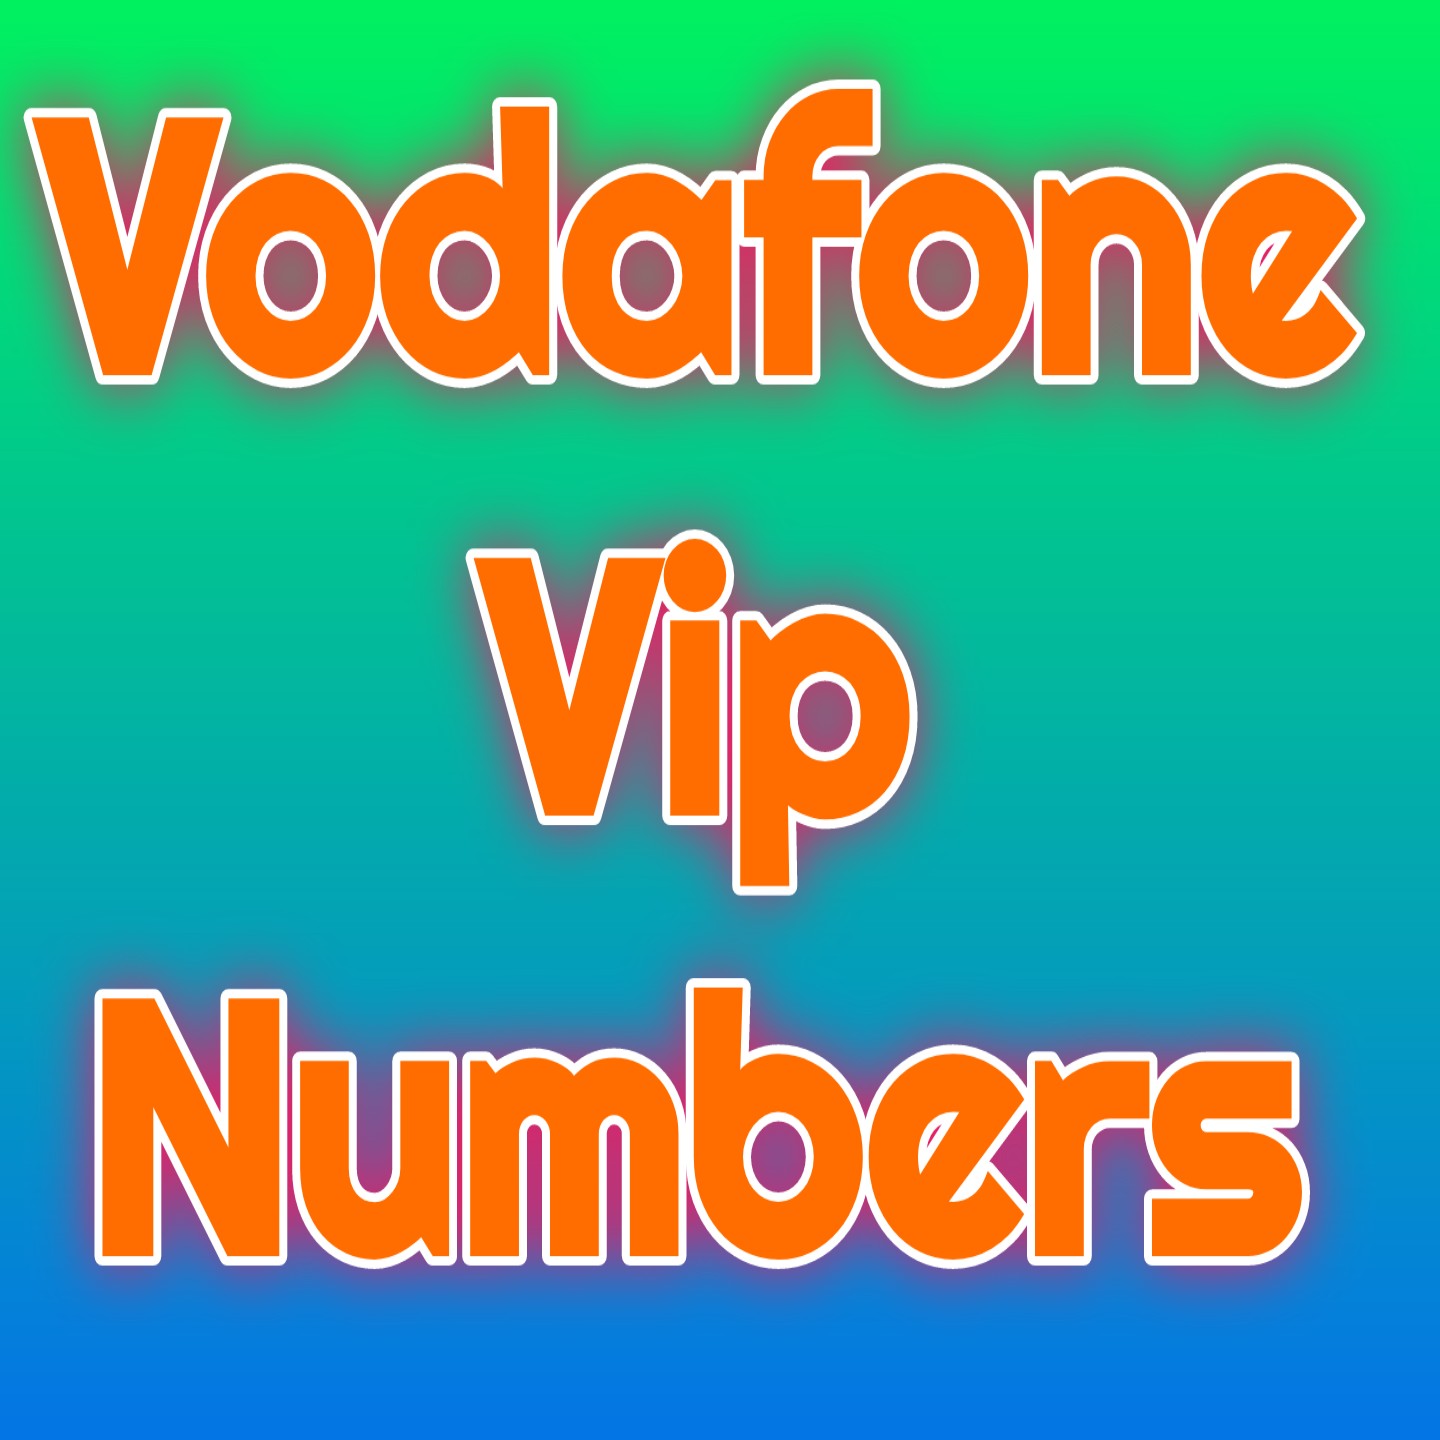 Vodafone Vip Number